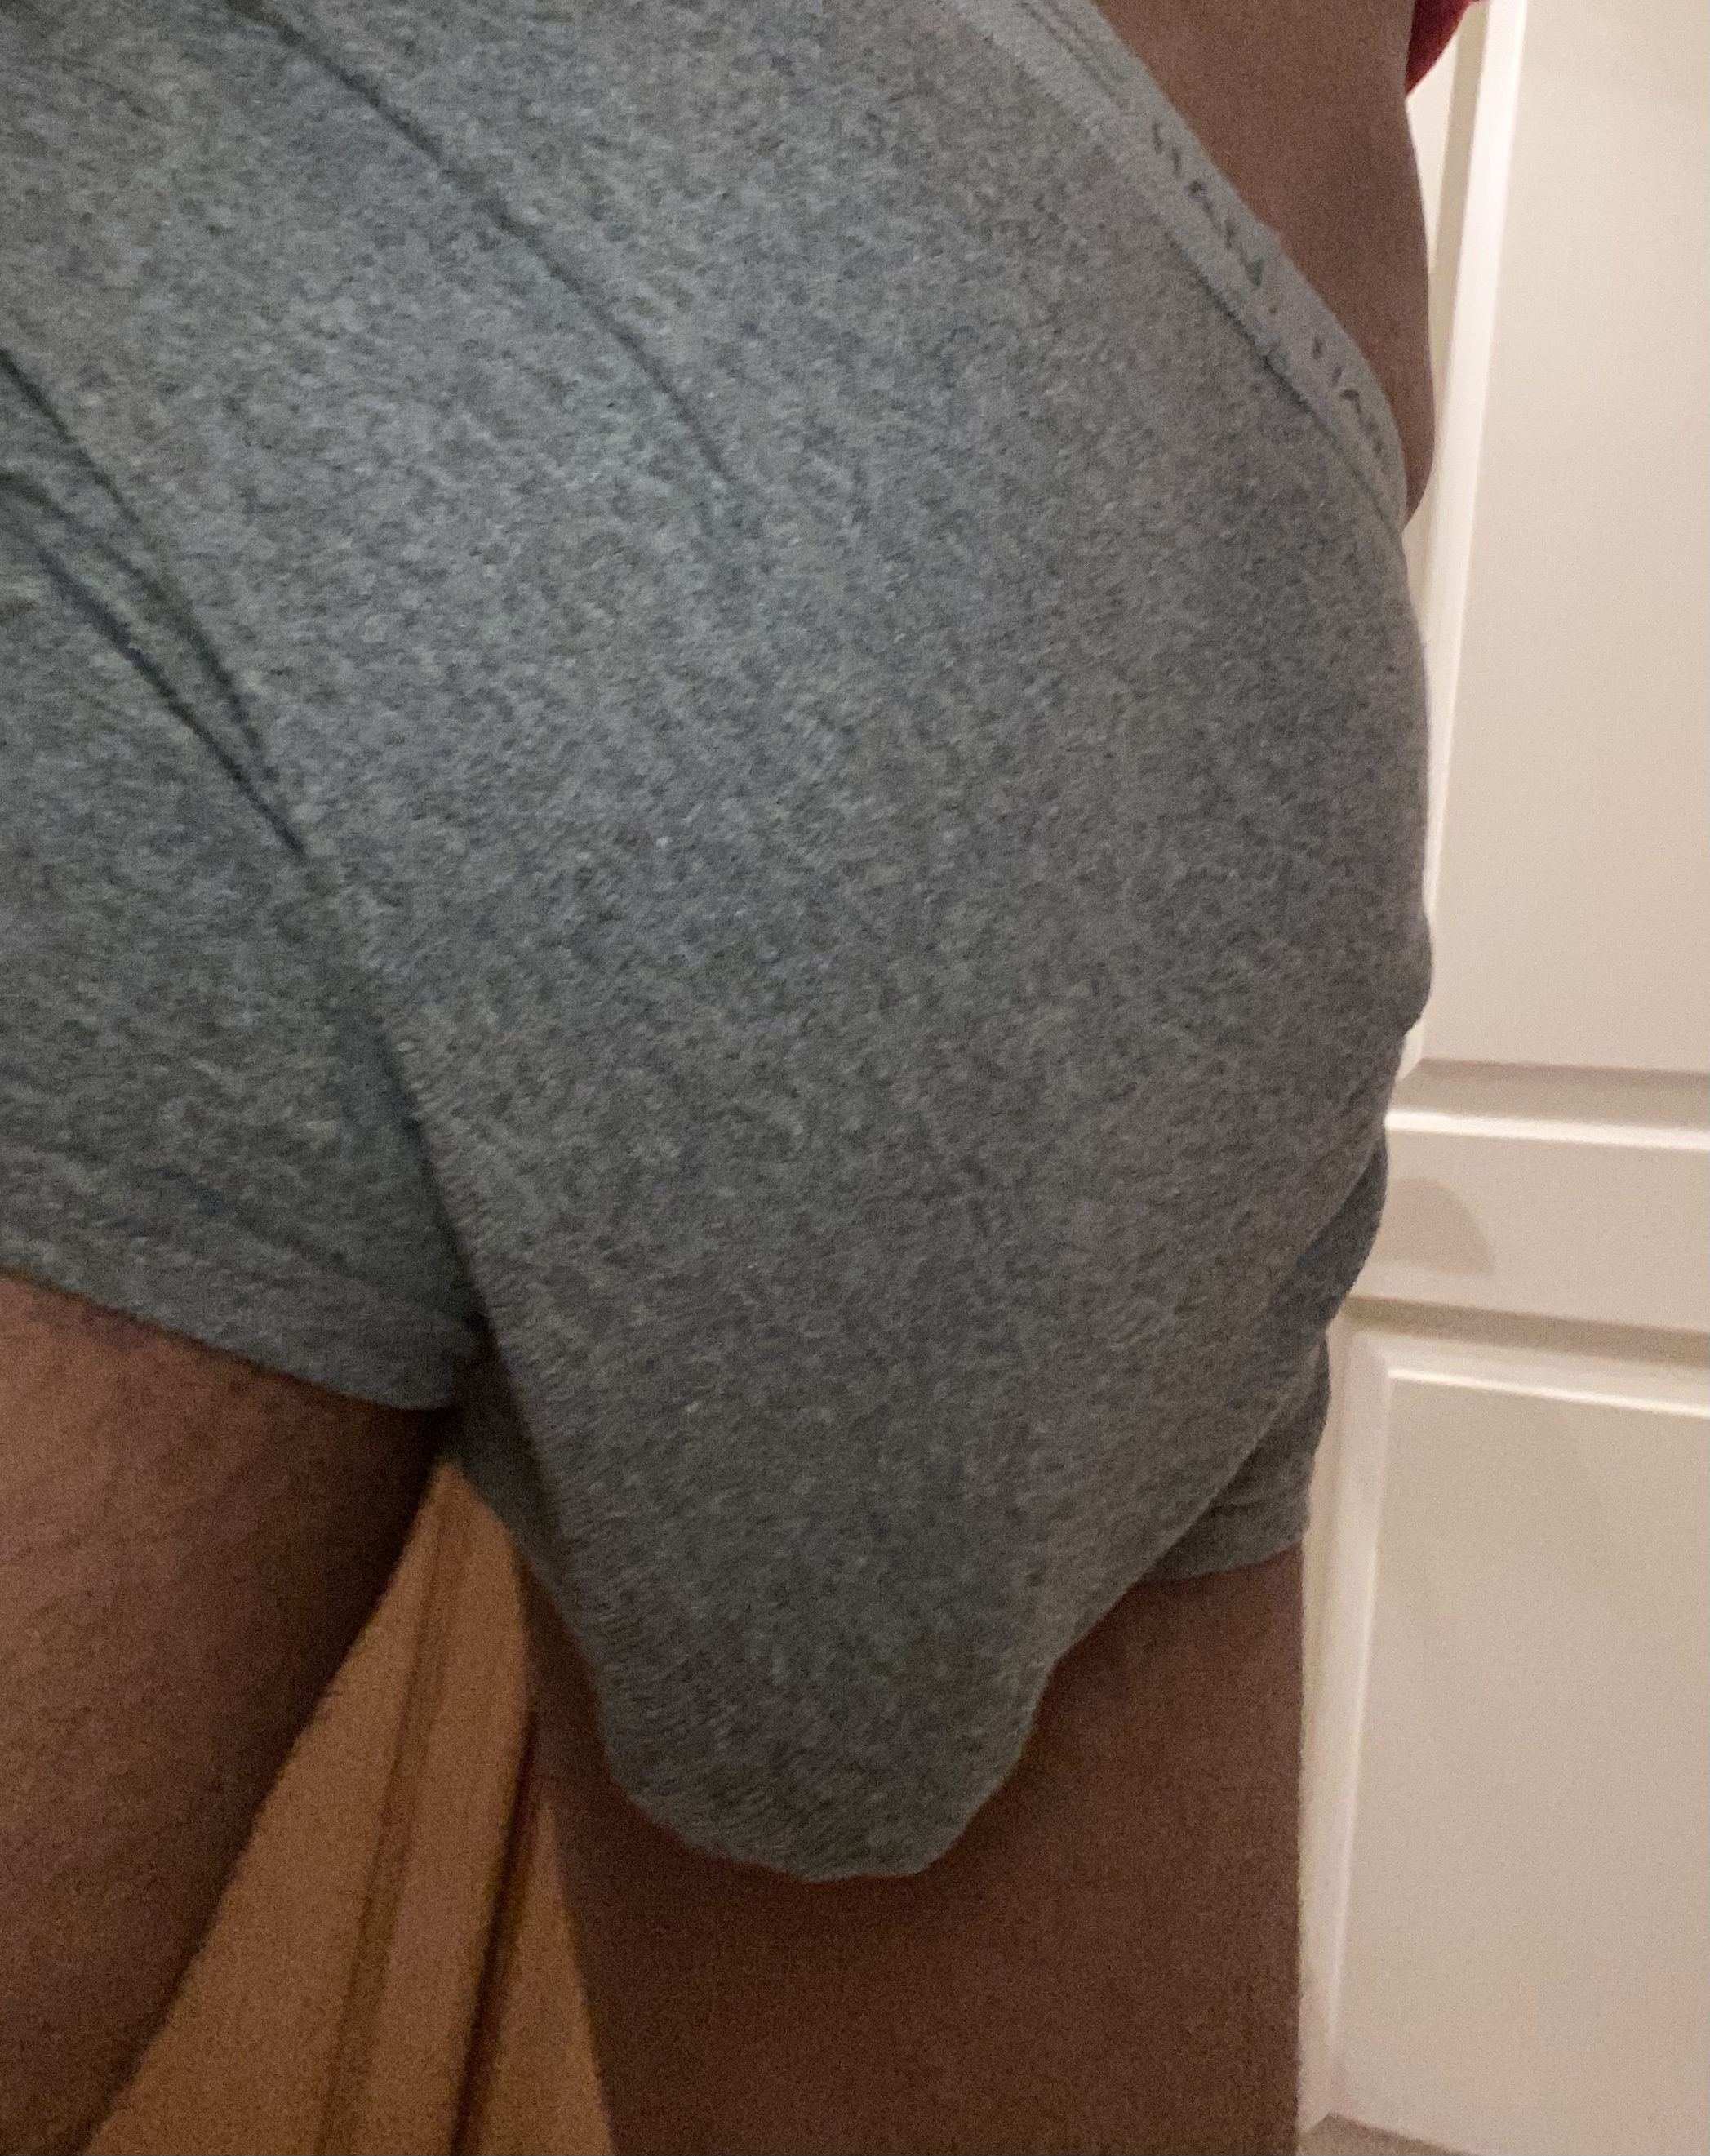 Massive log in my undies